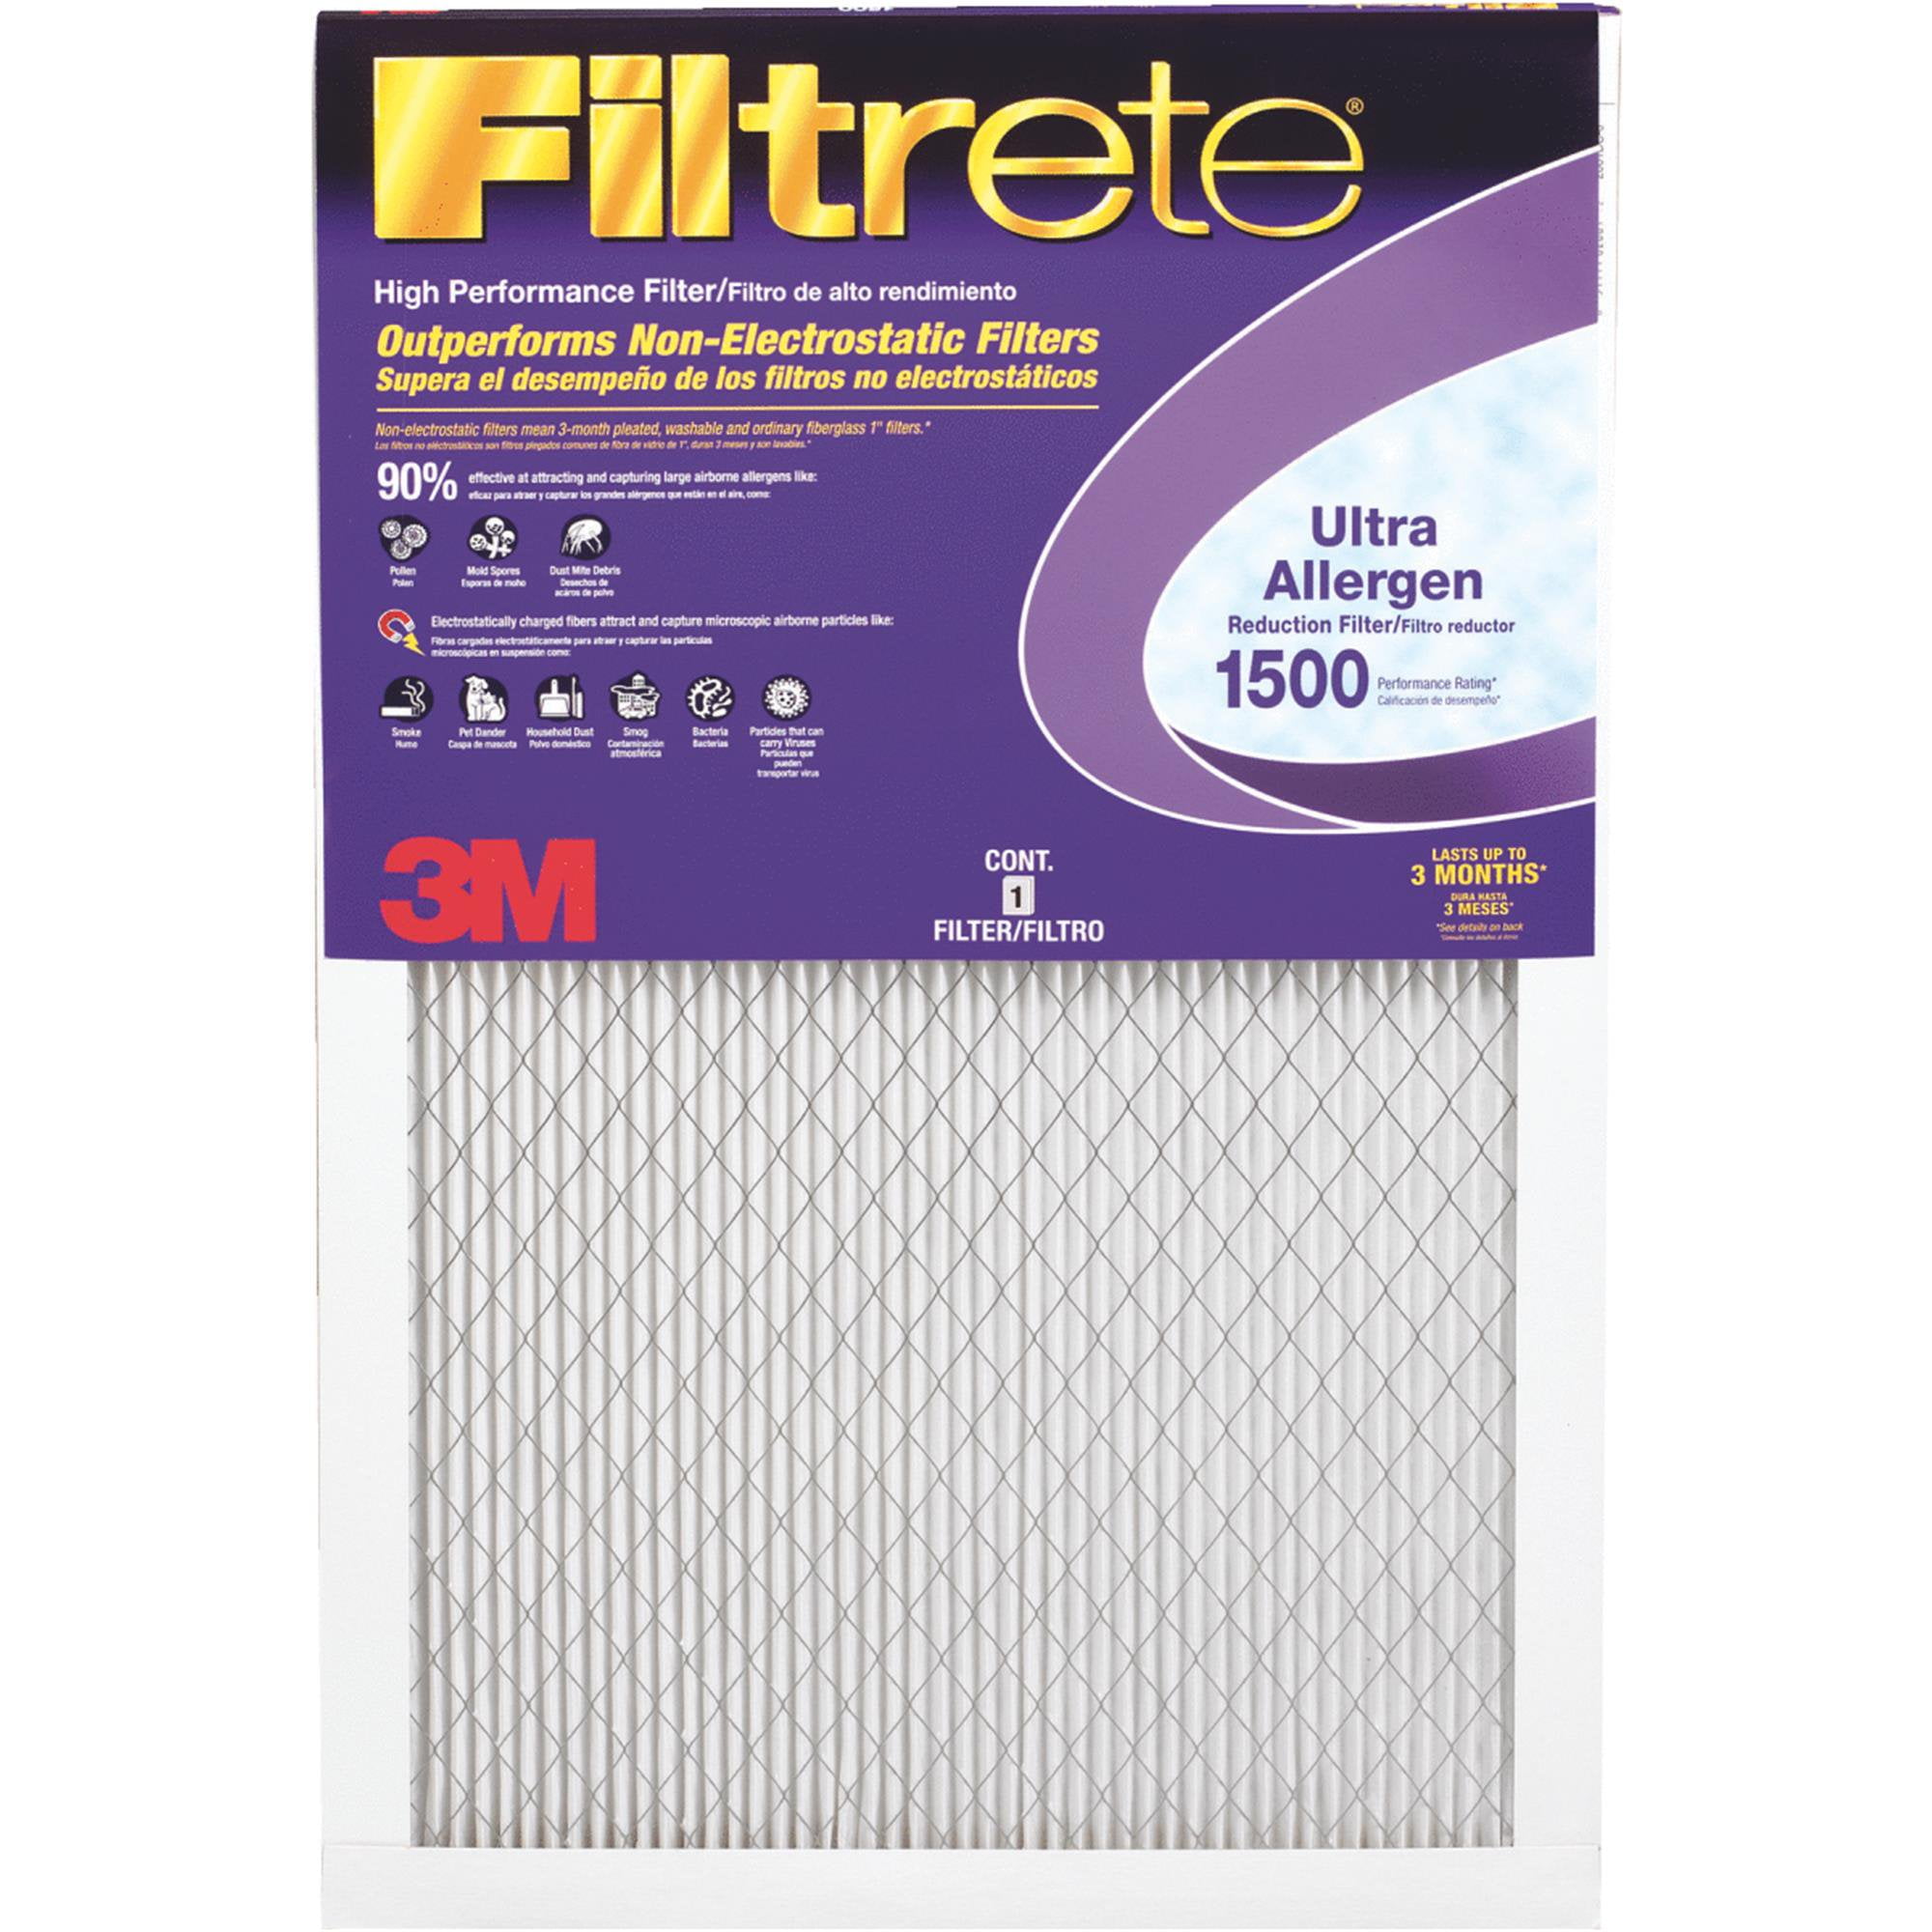 3m-filtrete-ultra-allergen-healthy-living-furnace-filter-walmart